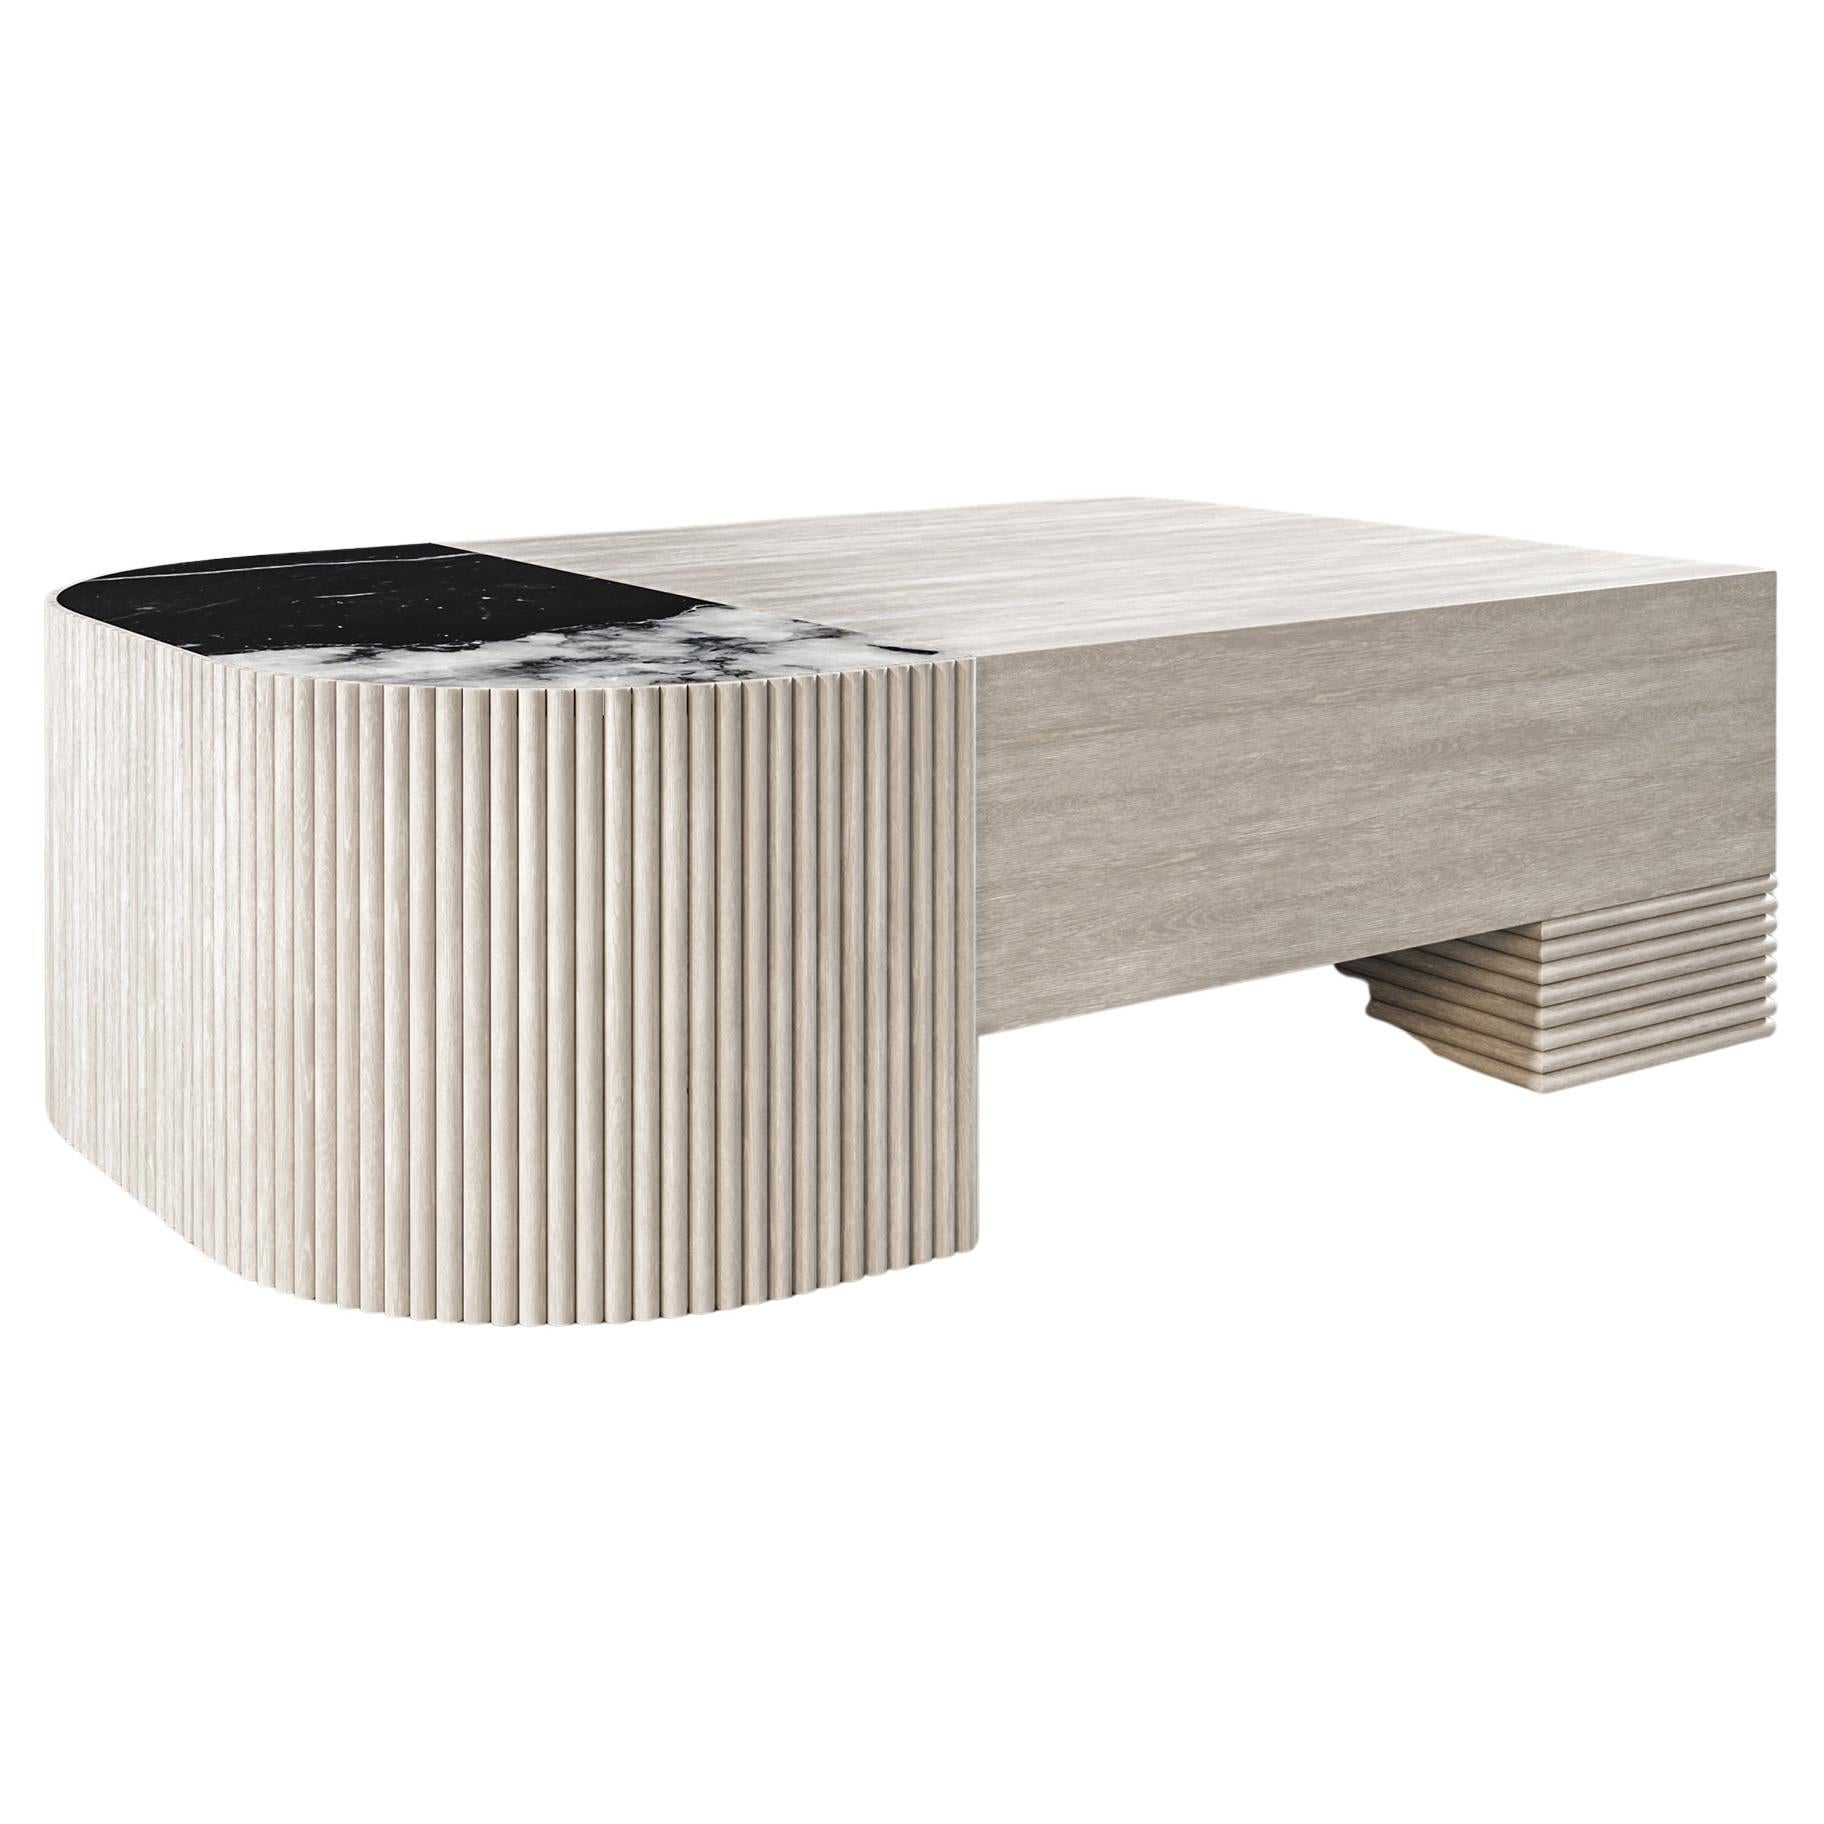 SWAY COFFEE TABLE – modernes Design mit sandfarbener Eiche + Nero Marquina Marmor